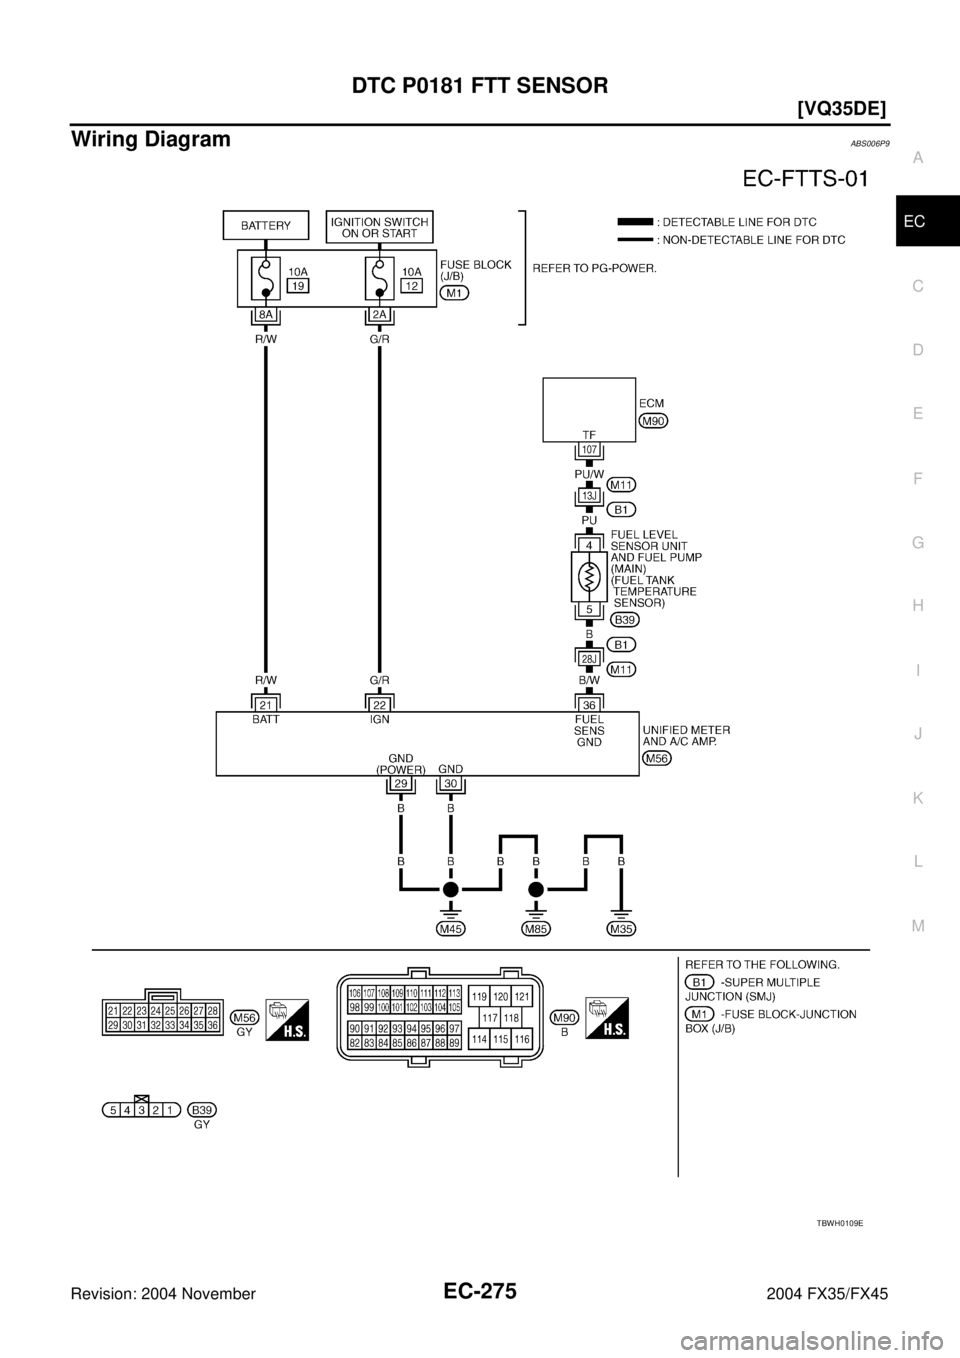 INFINITI FX35 2004  Service Manual DTC P0181 FTT SENSOR
EC-275
[VQ35DE]
C
D
E
F
G
H
I
J
K
L
MA
EC
Revision: 2004 November 2004 FX35/FX45
Wiring DiagramABS006P9
TBWH0109E 